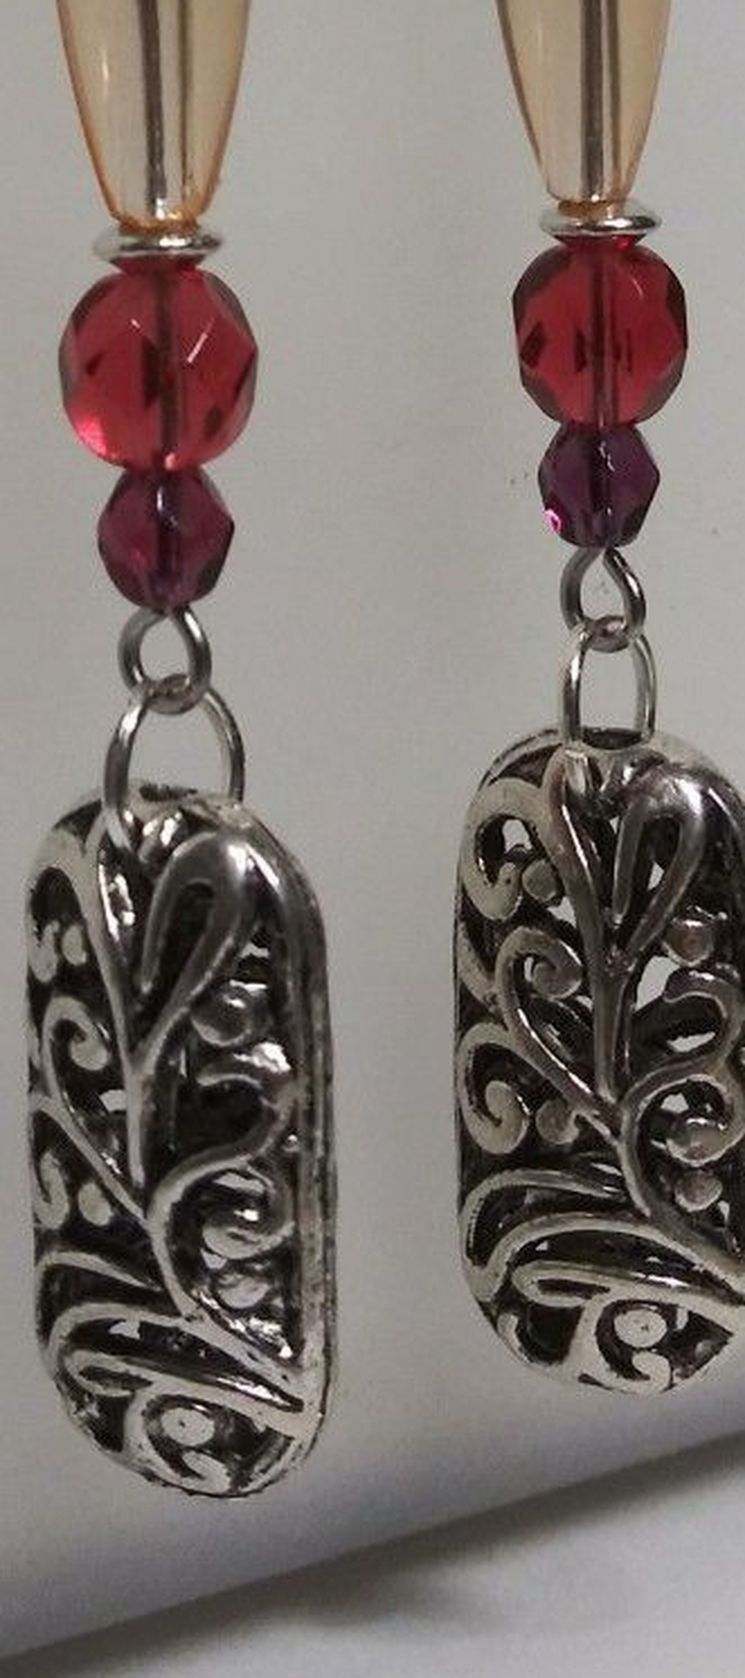 Handmade Dangle Earrings